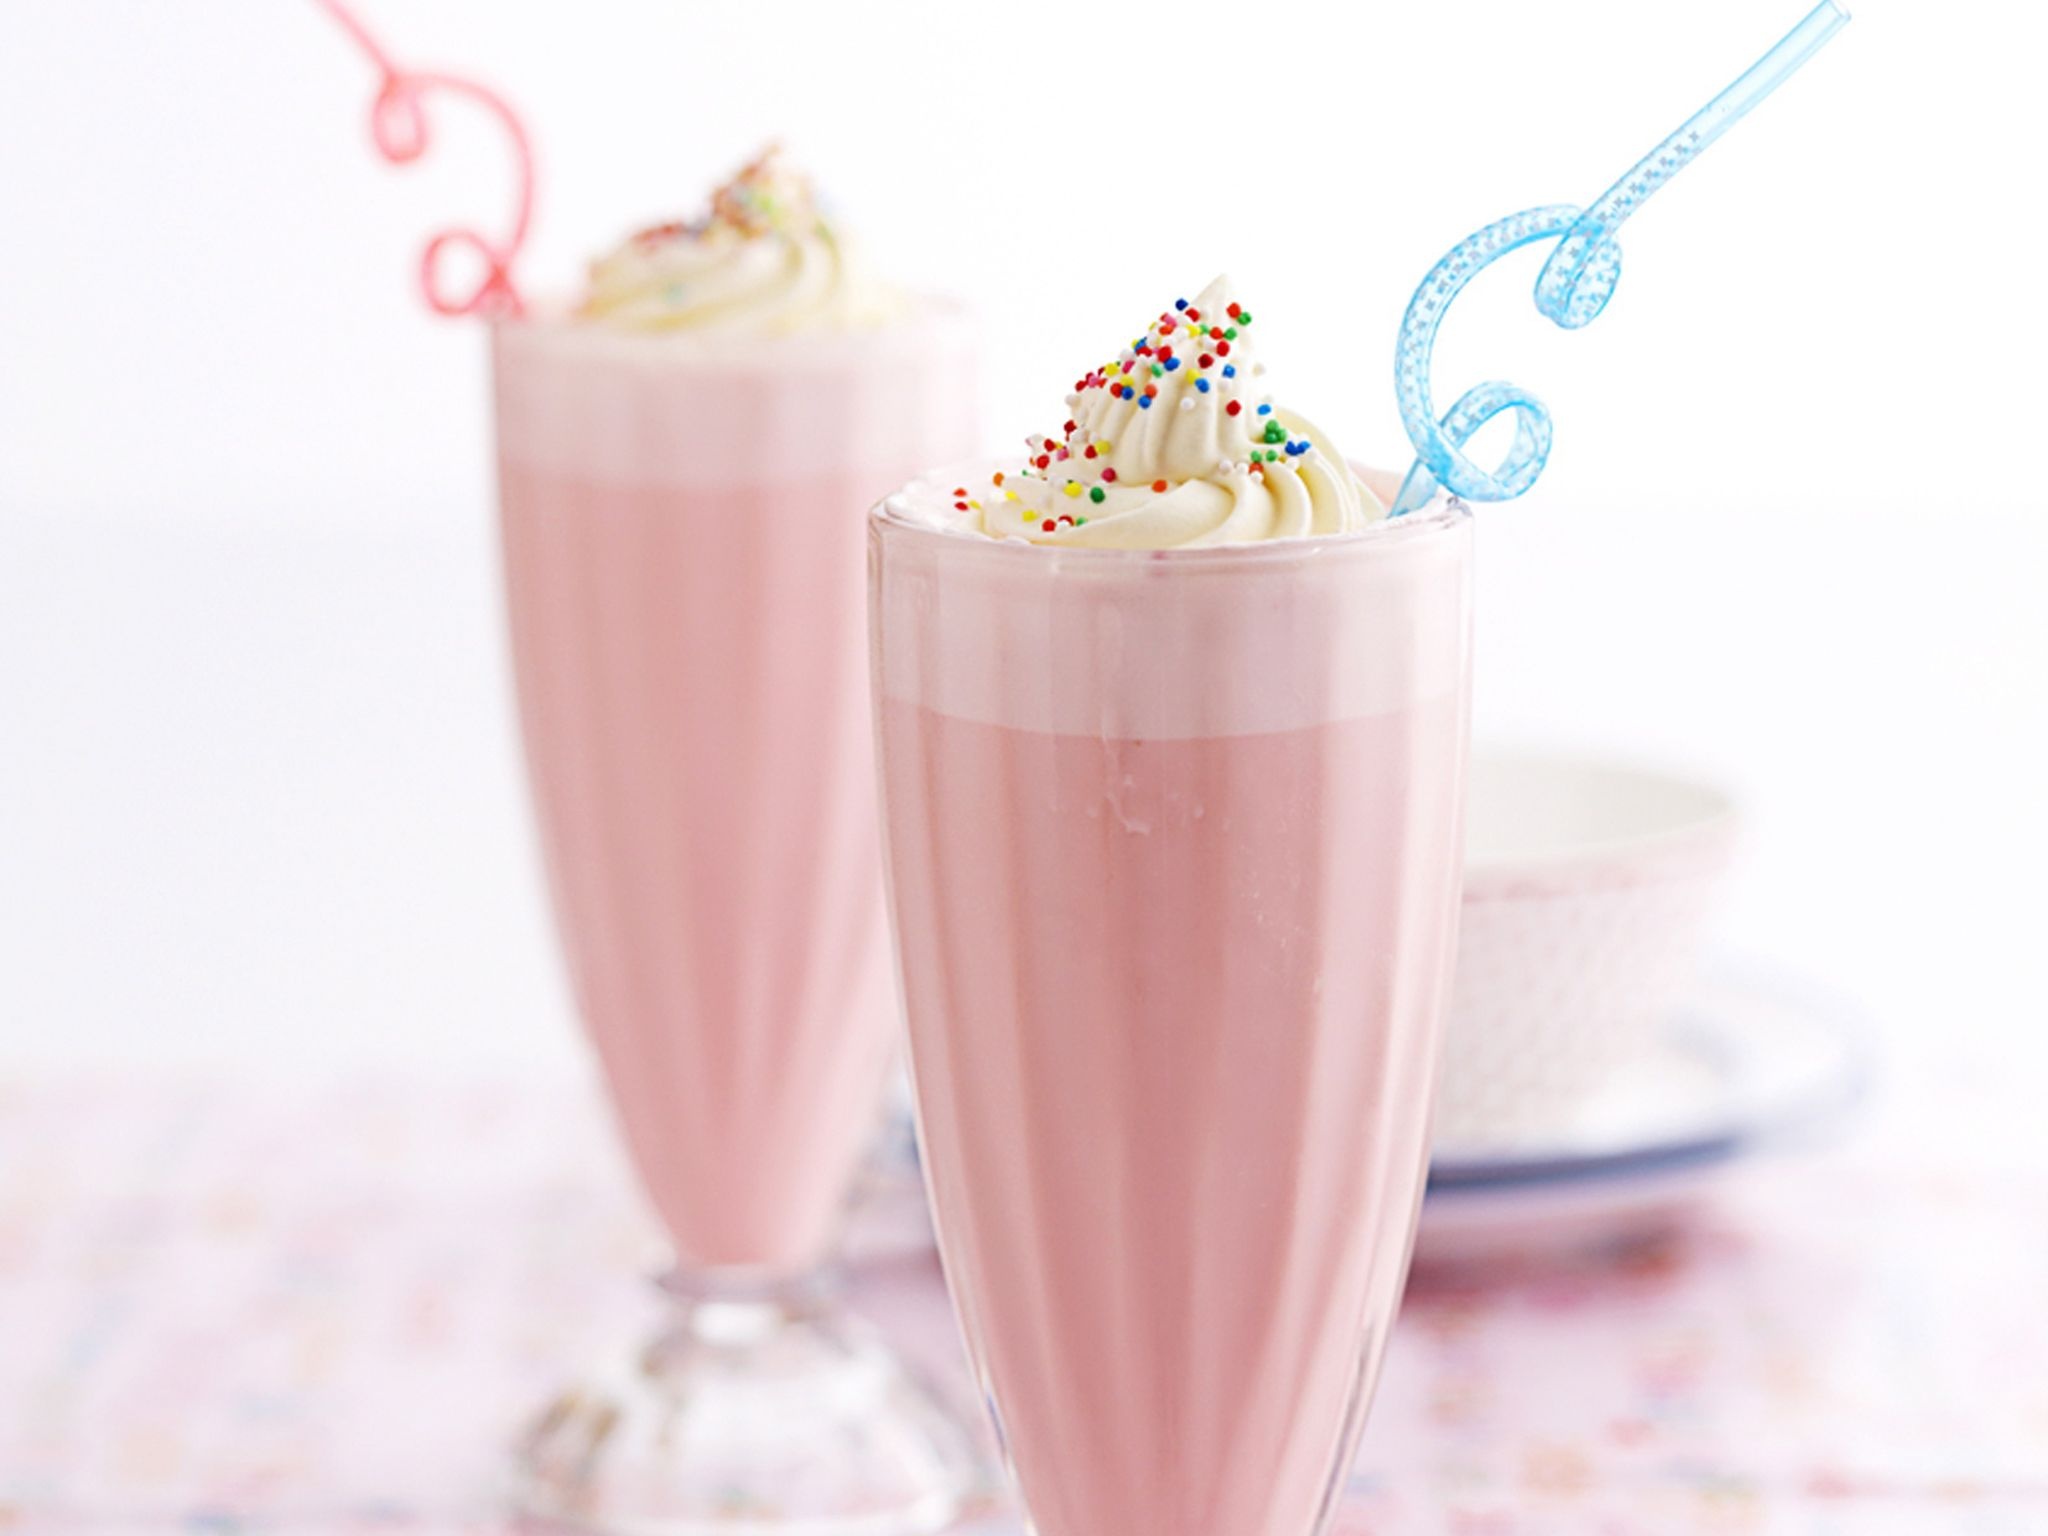 Milkshake: Mixing milk with a flavoring or fruit, Drinking straw. 2050x1540 HD Wallpaper.